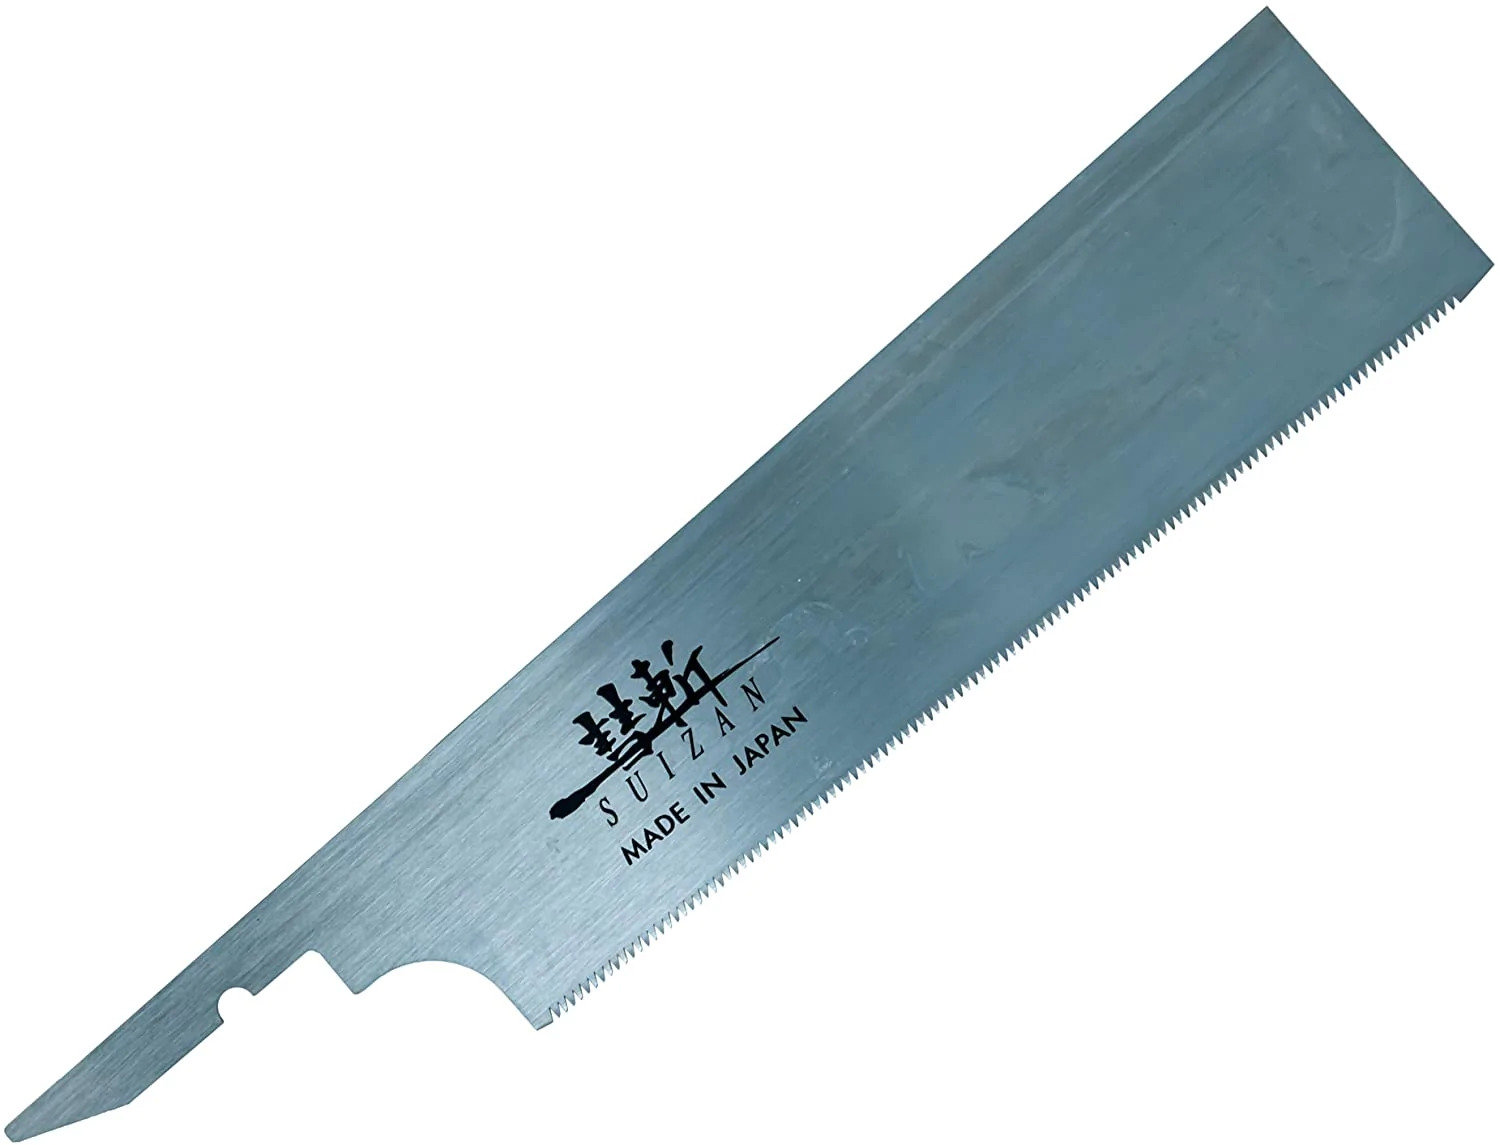 SUIZAN Dozuki 7 inch Replacement Blade